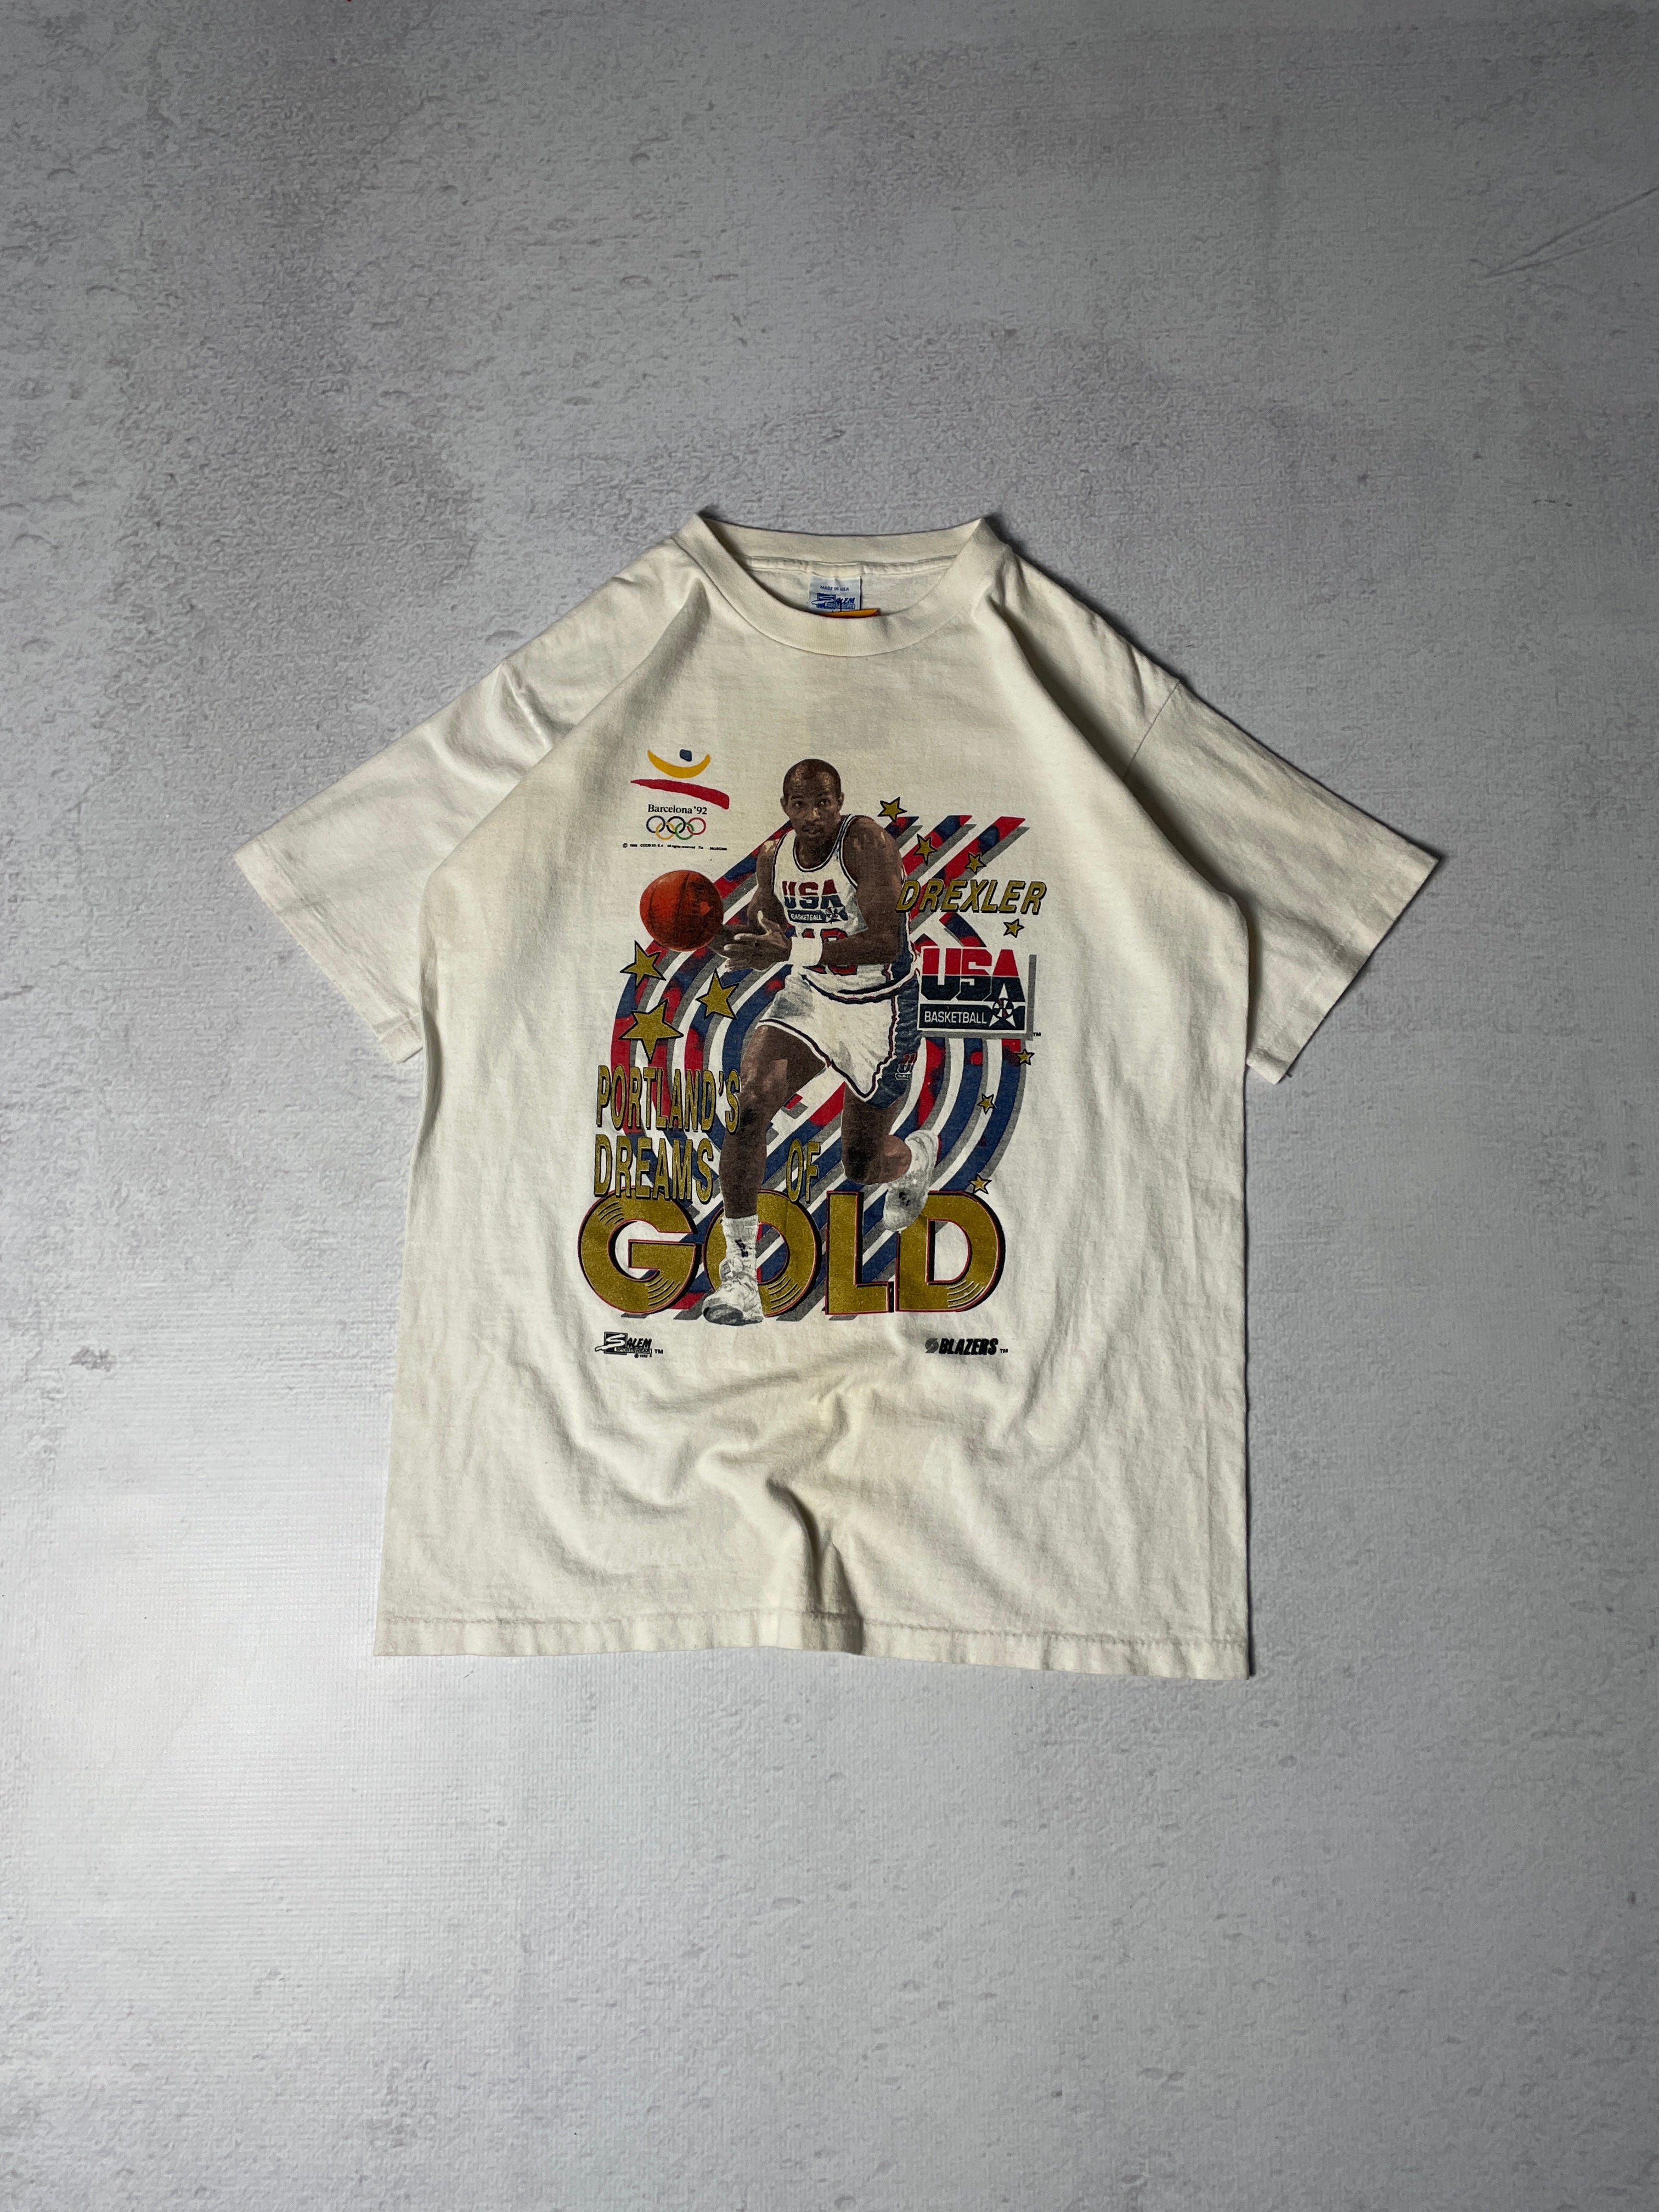 Vintage 1992 NBA Clyde Drexler USA Basketball Portland's Dreams of Gold T-Shirt - Men's Large